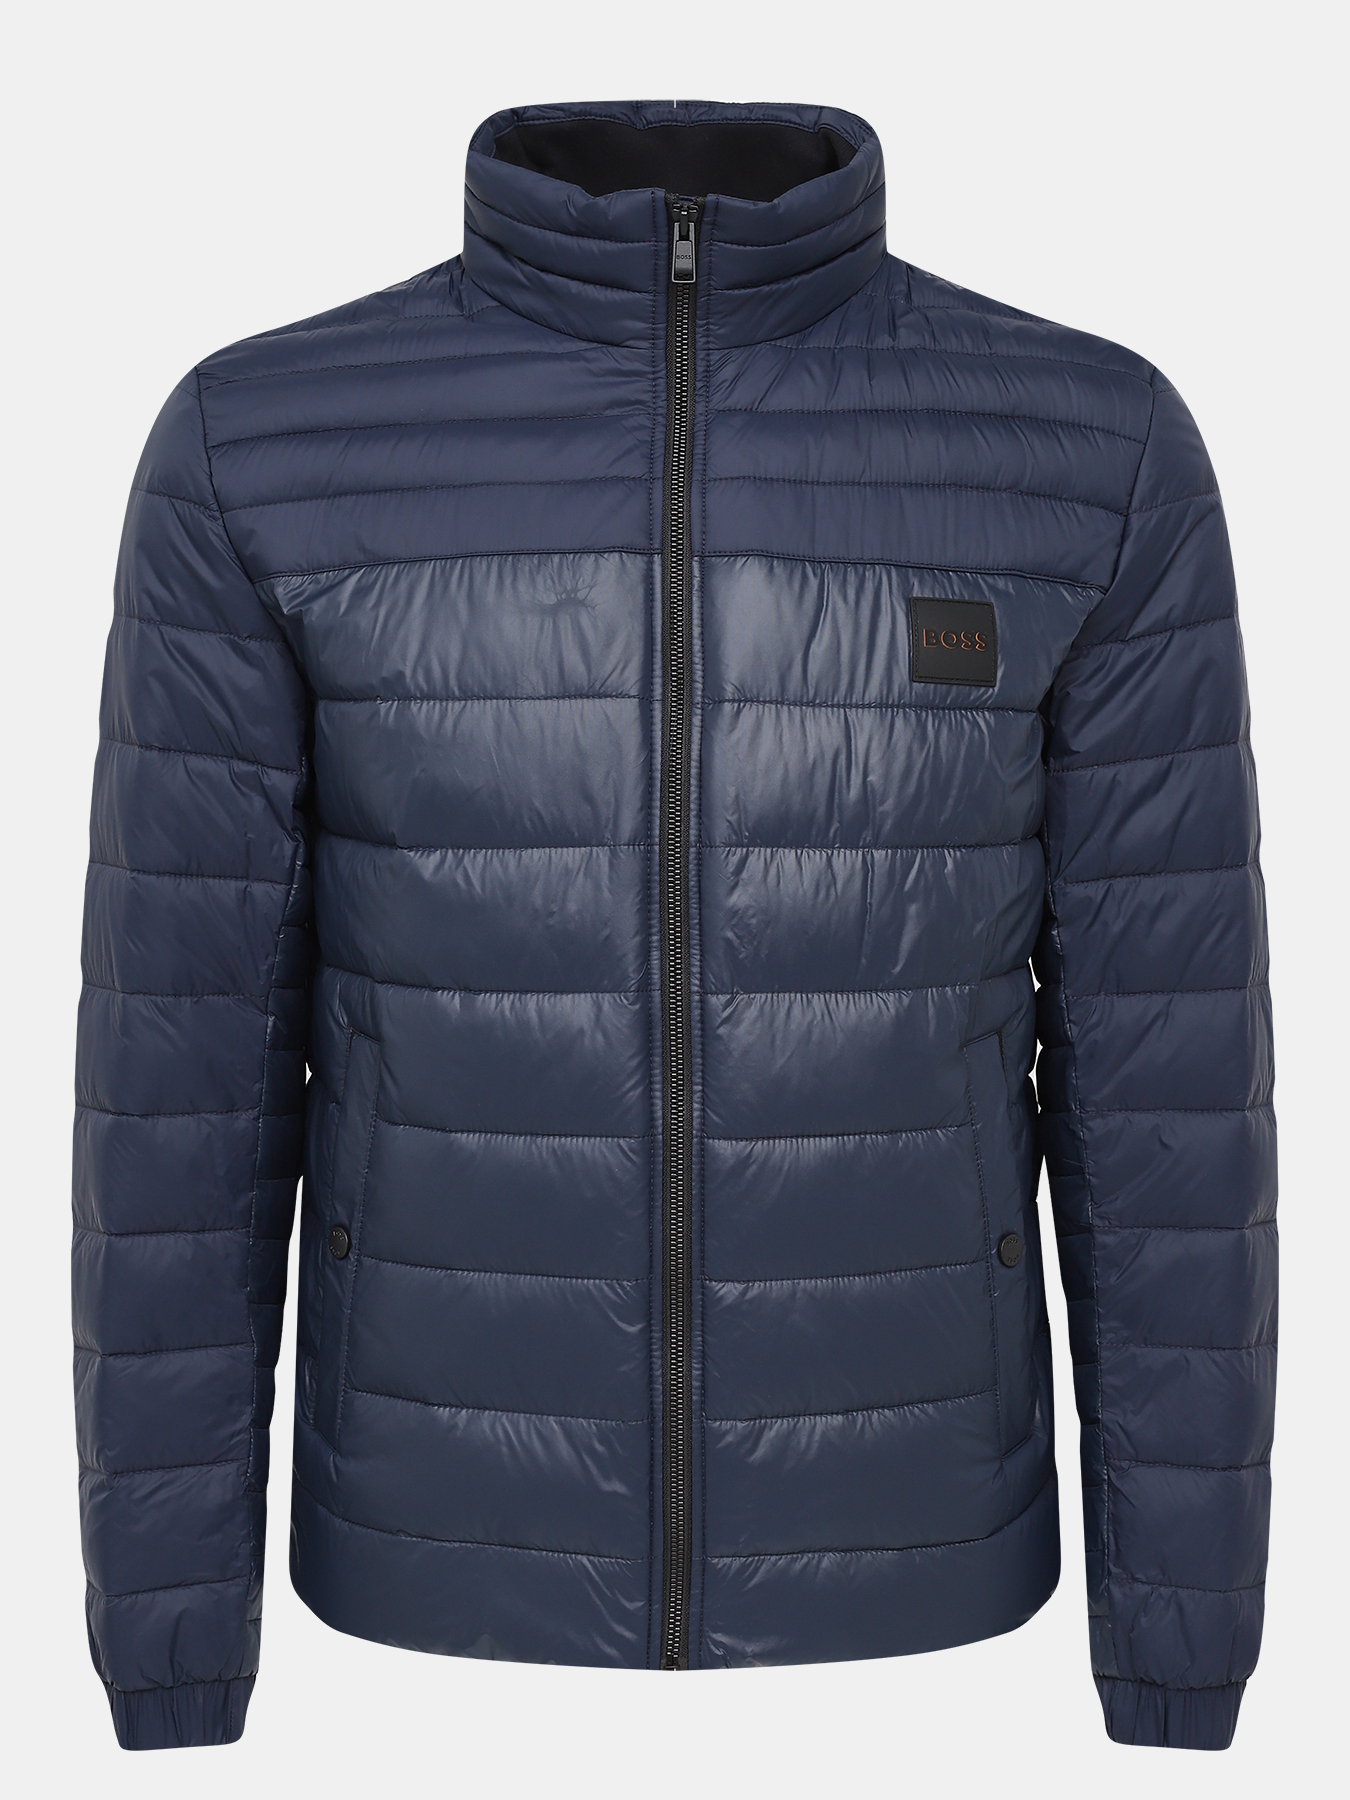 Куртка Oden BOSS 434079-027, цвет темно-синий, размер 52 - фото 1